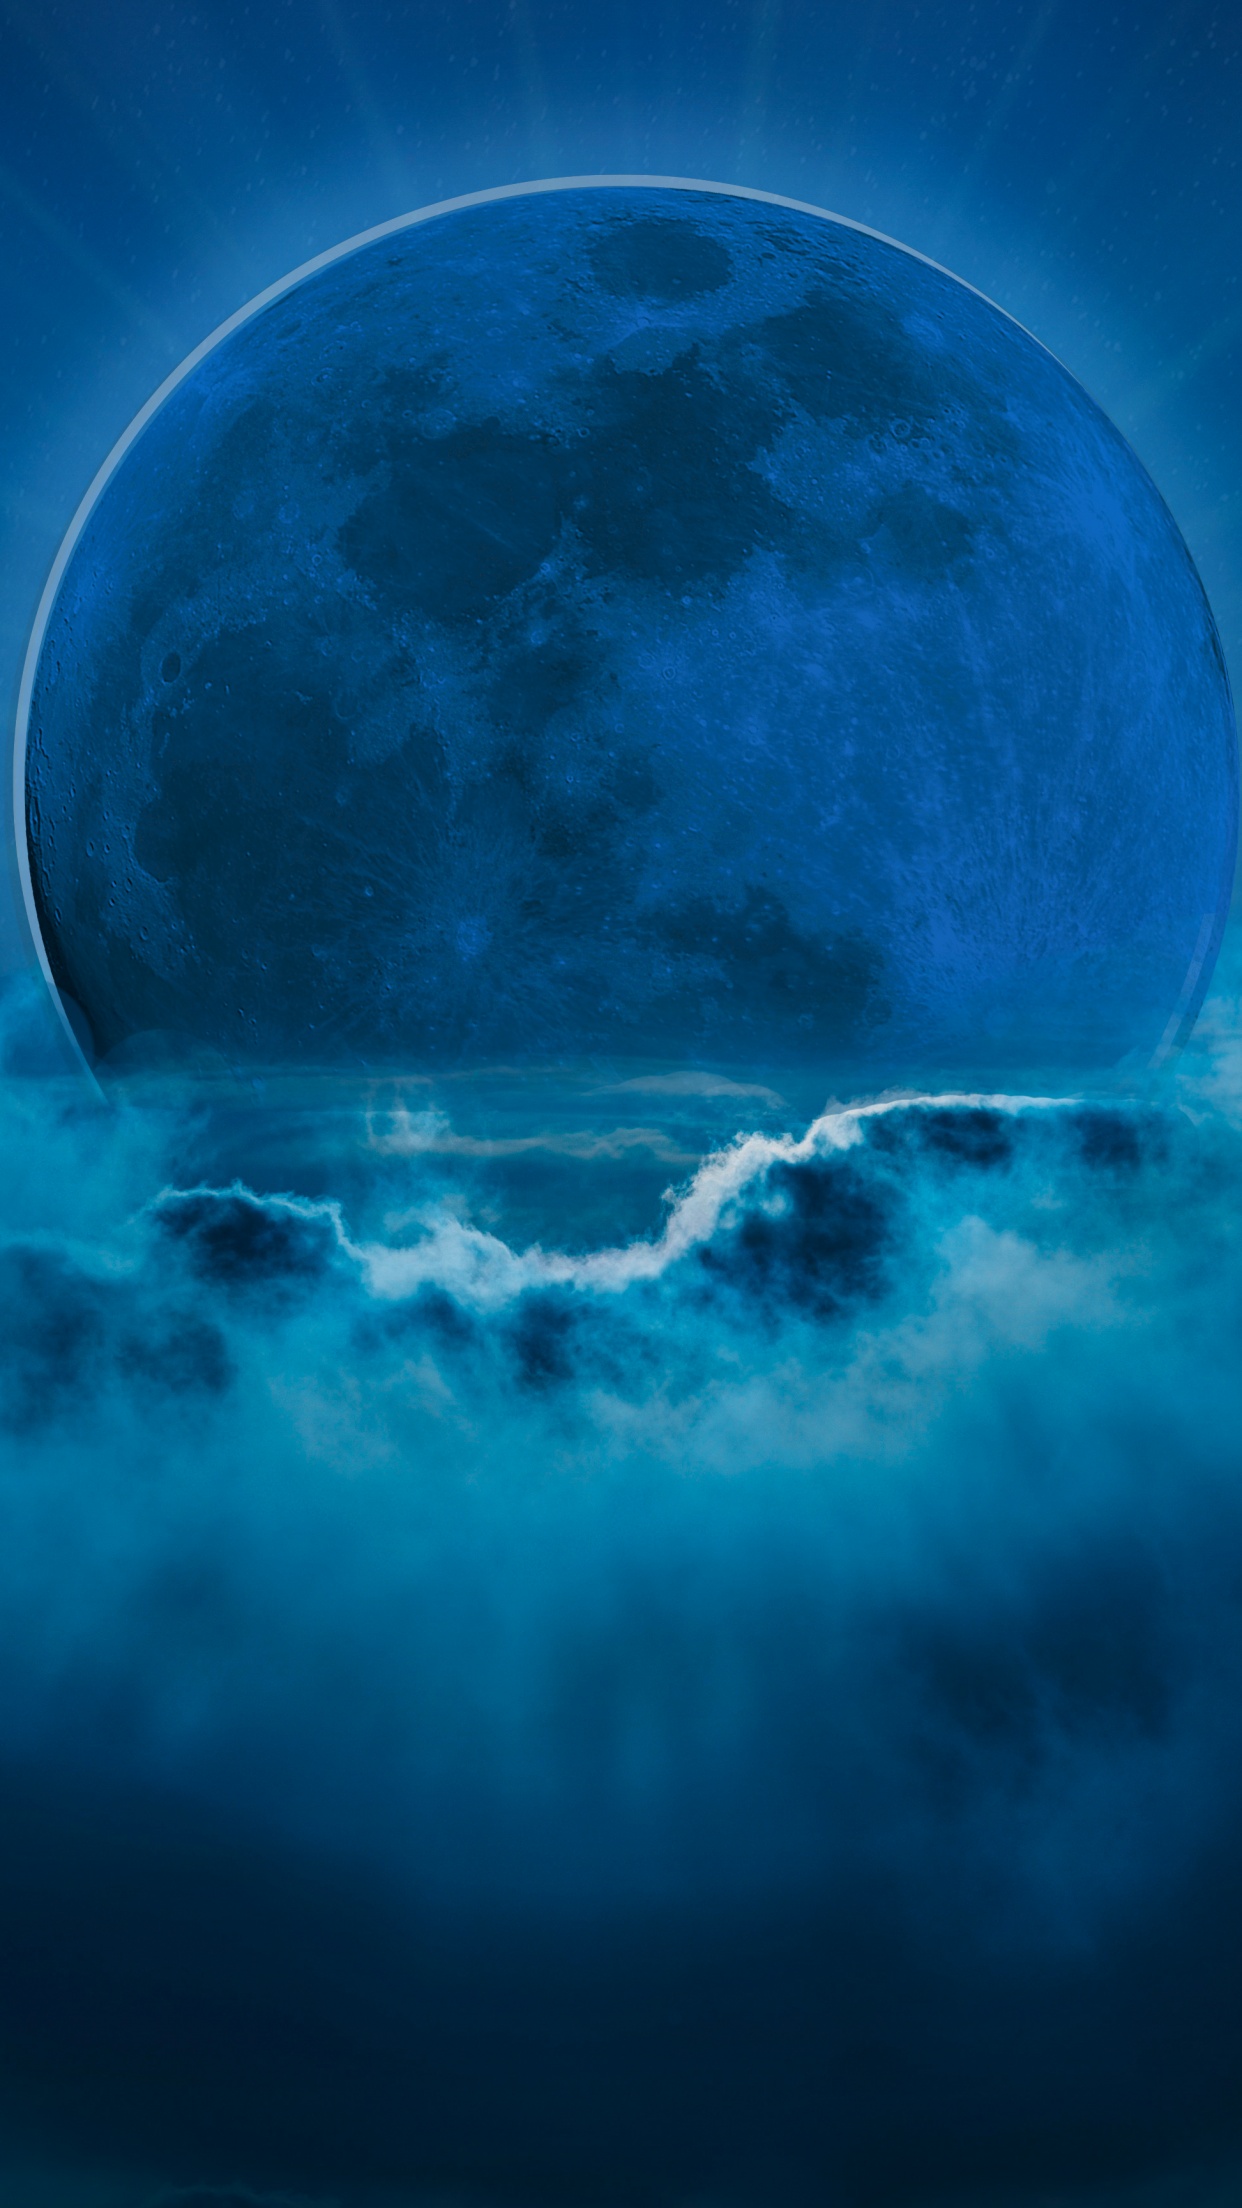 Blue Moon Images  Free Download on Freepik